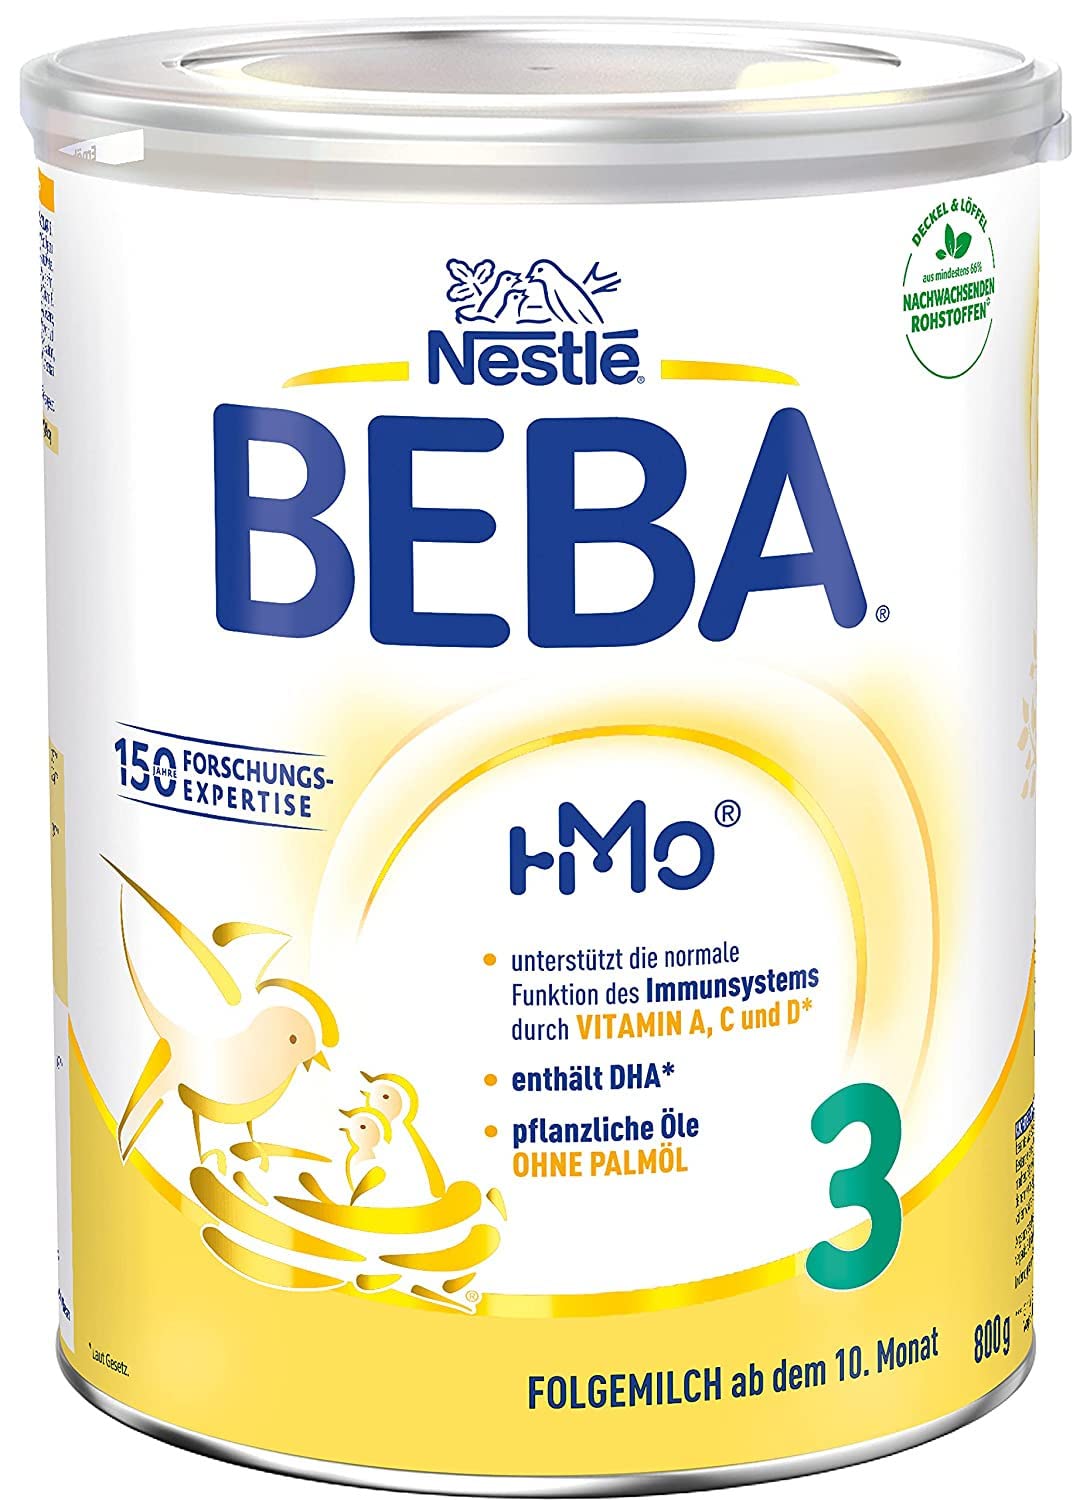 Nestlé BEBA 3 Folgemilch, Folgenahrung ab dem 10. Monat, 1 x 800g